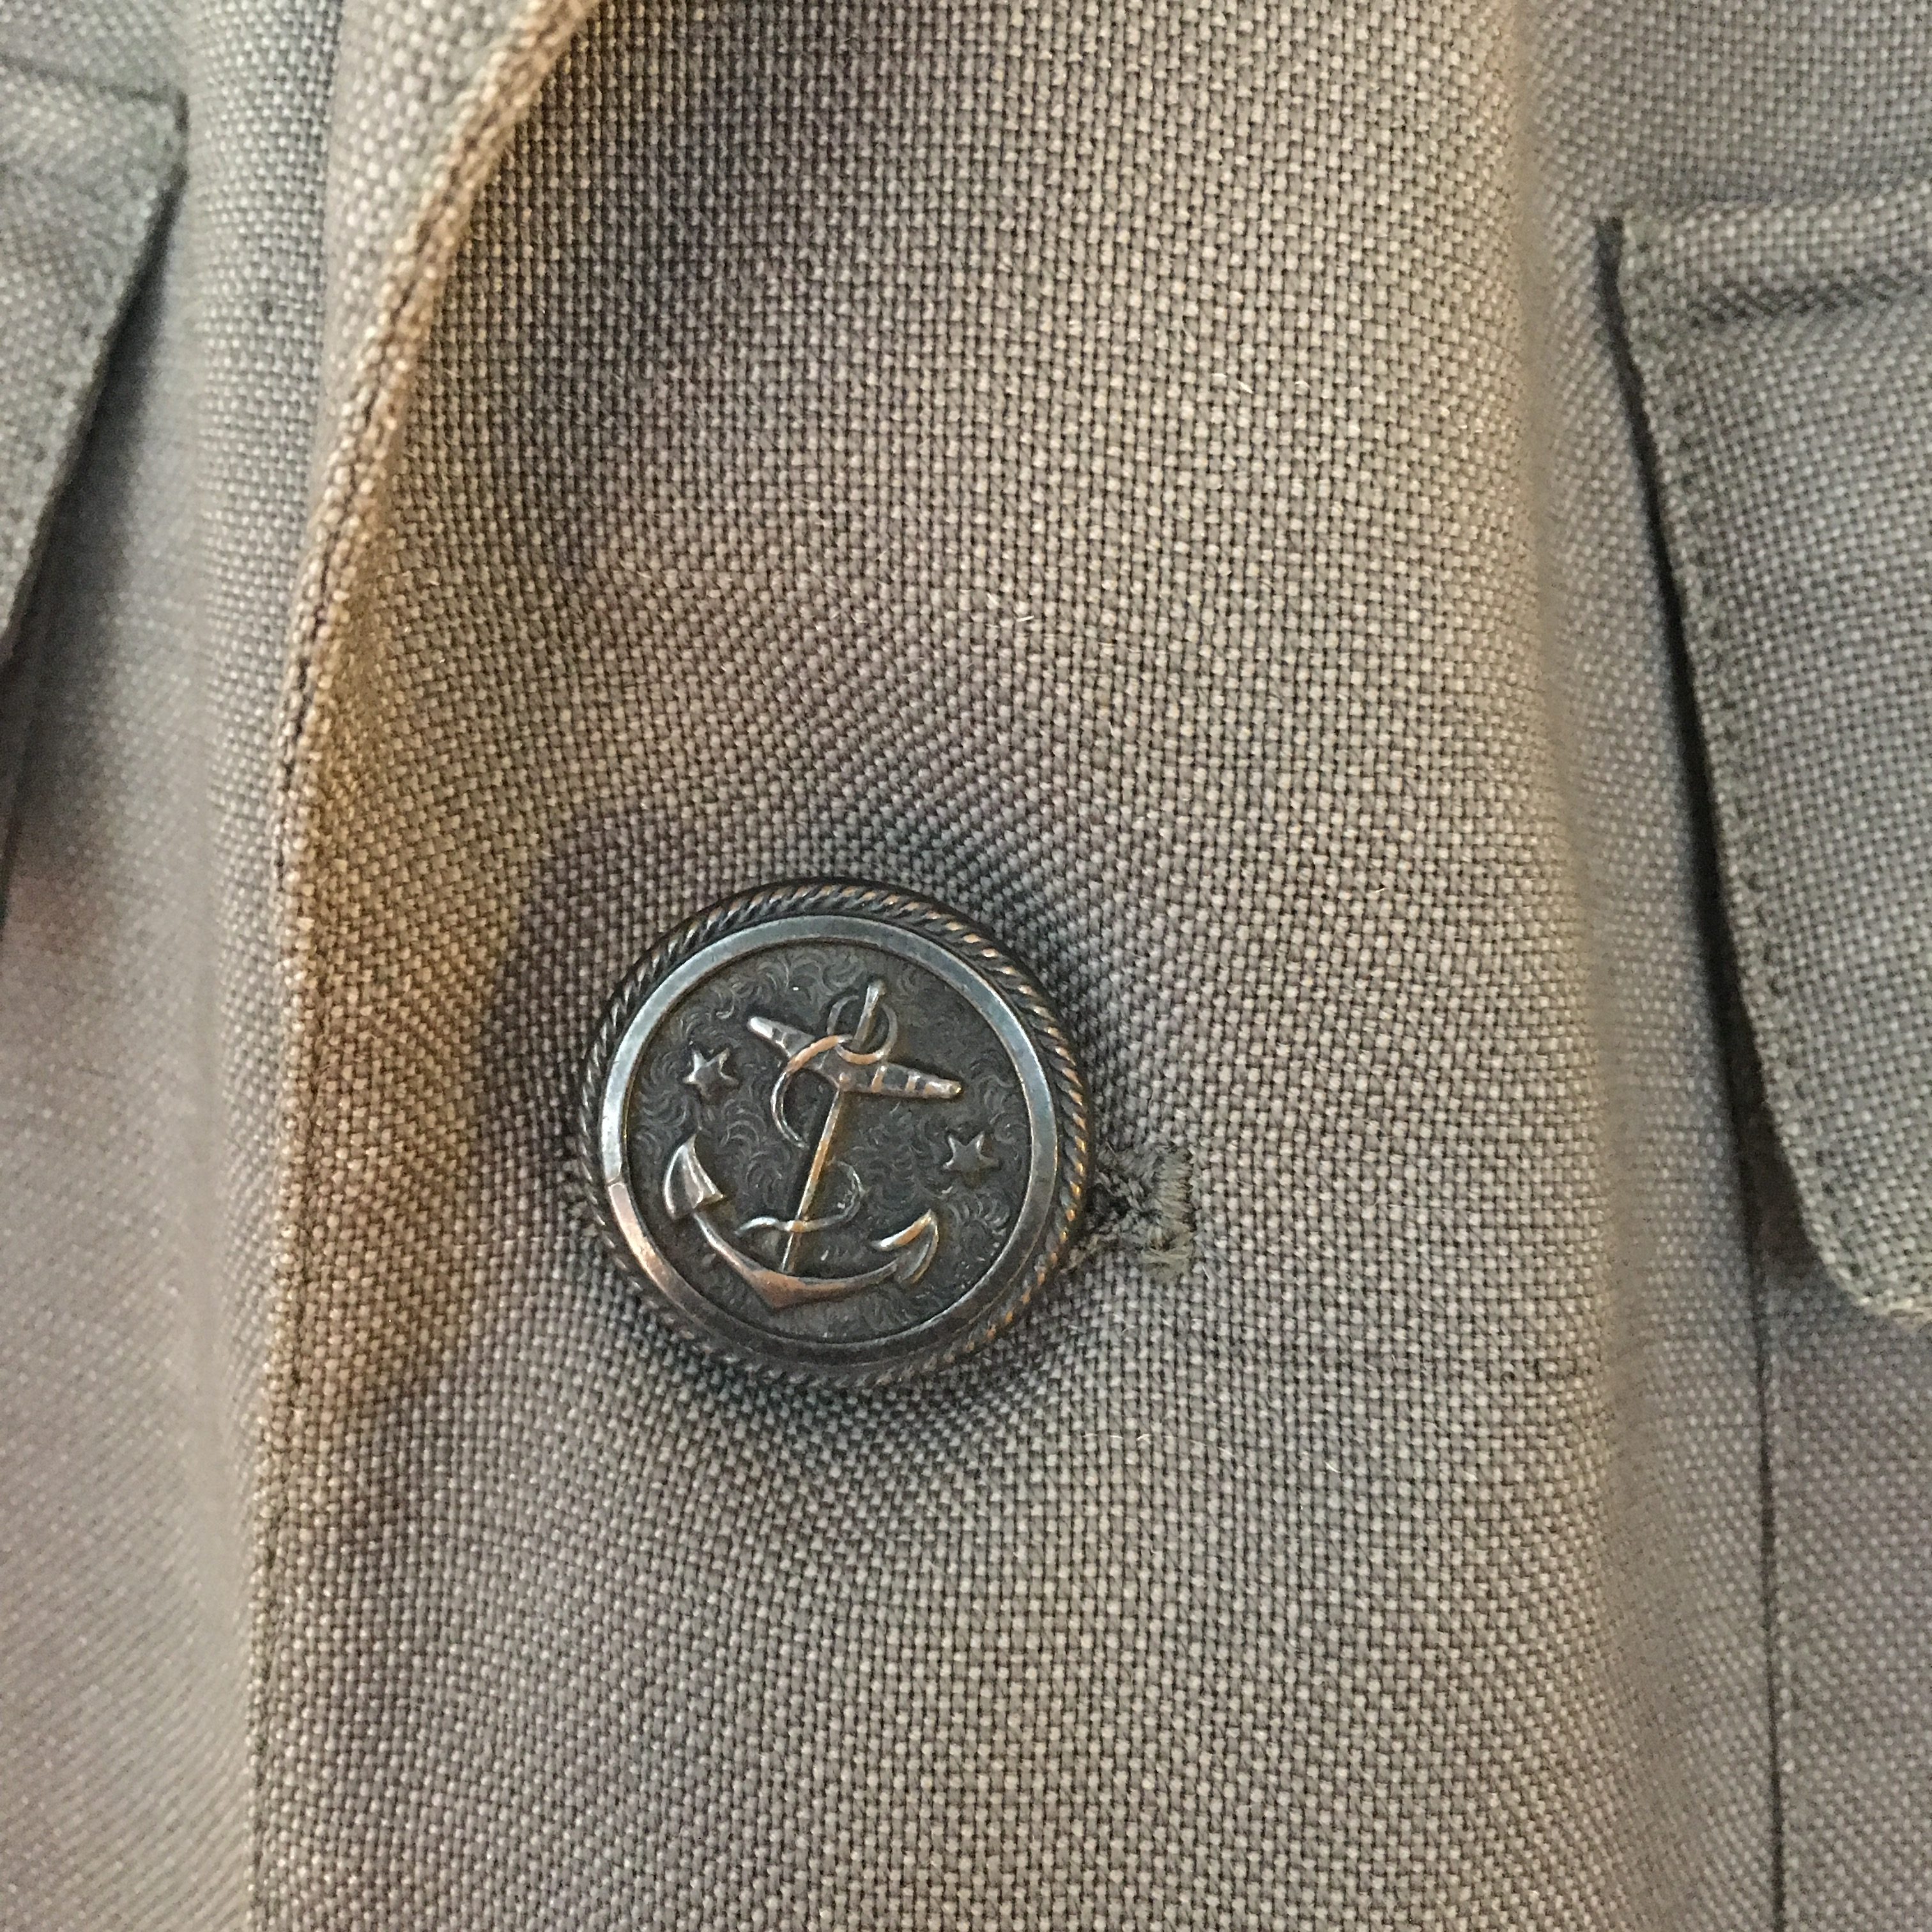 usmm uniforms: slate gray uniform, 1943 – a collection of writing